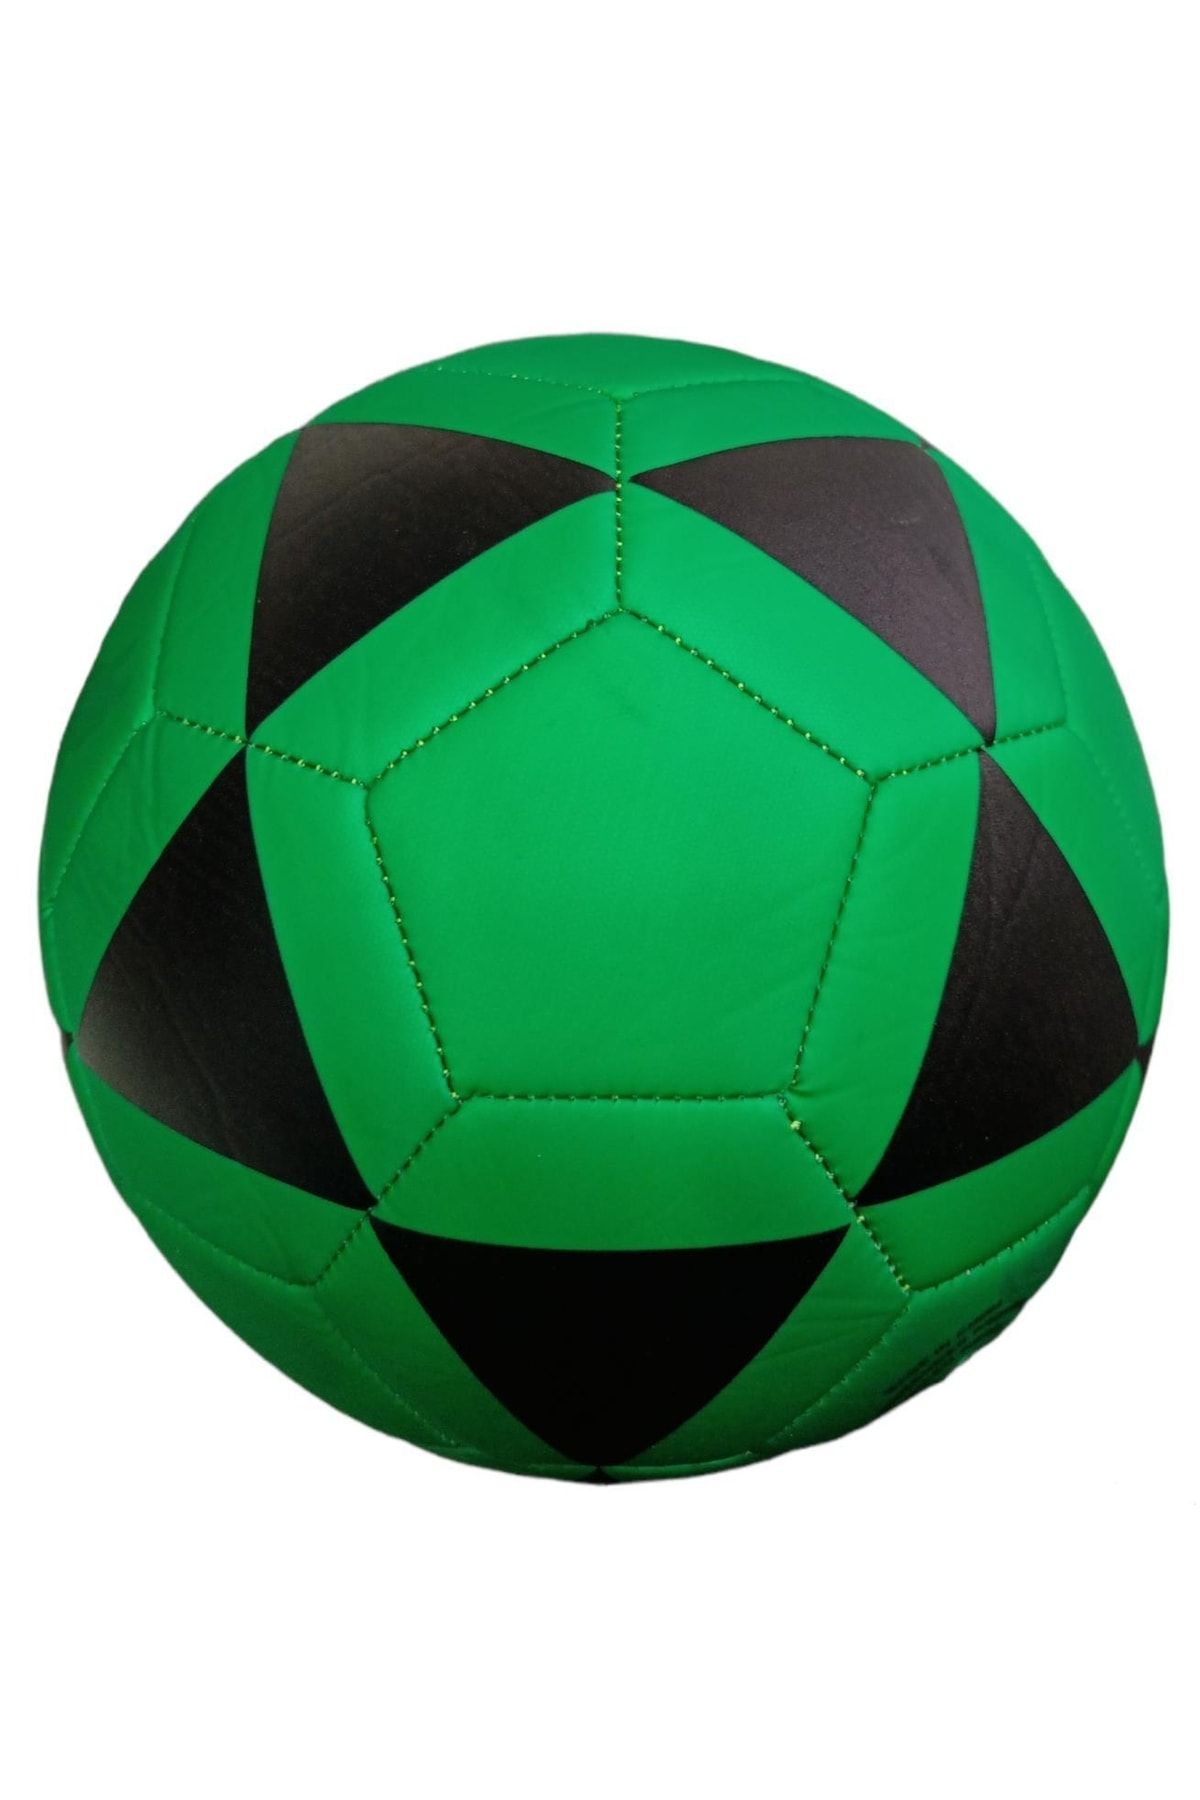 Avessa 3 Astar Futbol Topu No.5 Yeşil Siyah Desenli